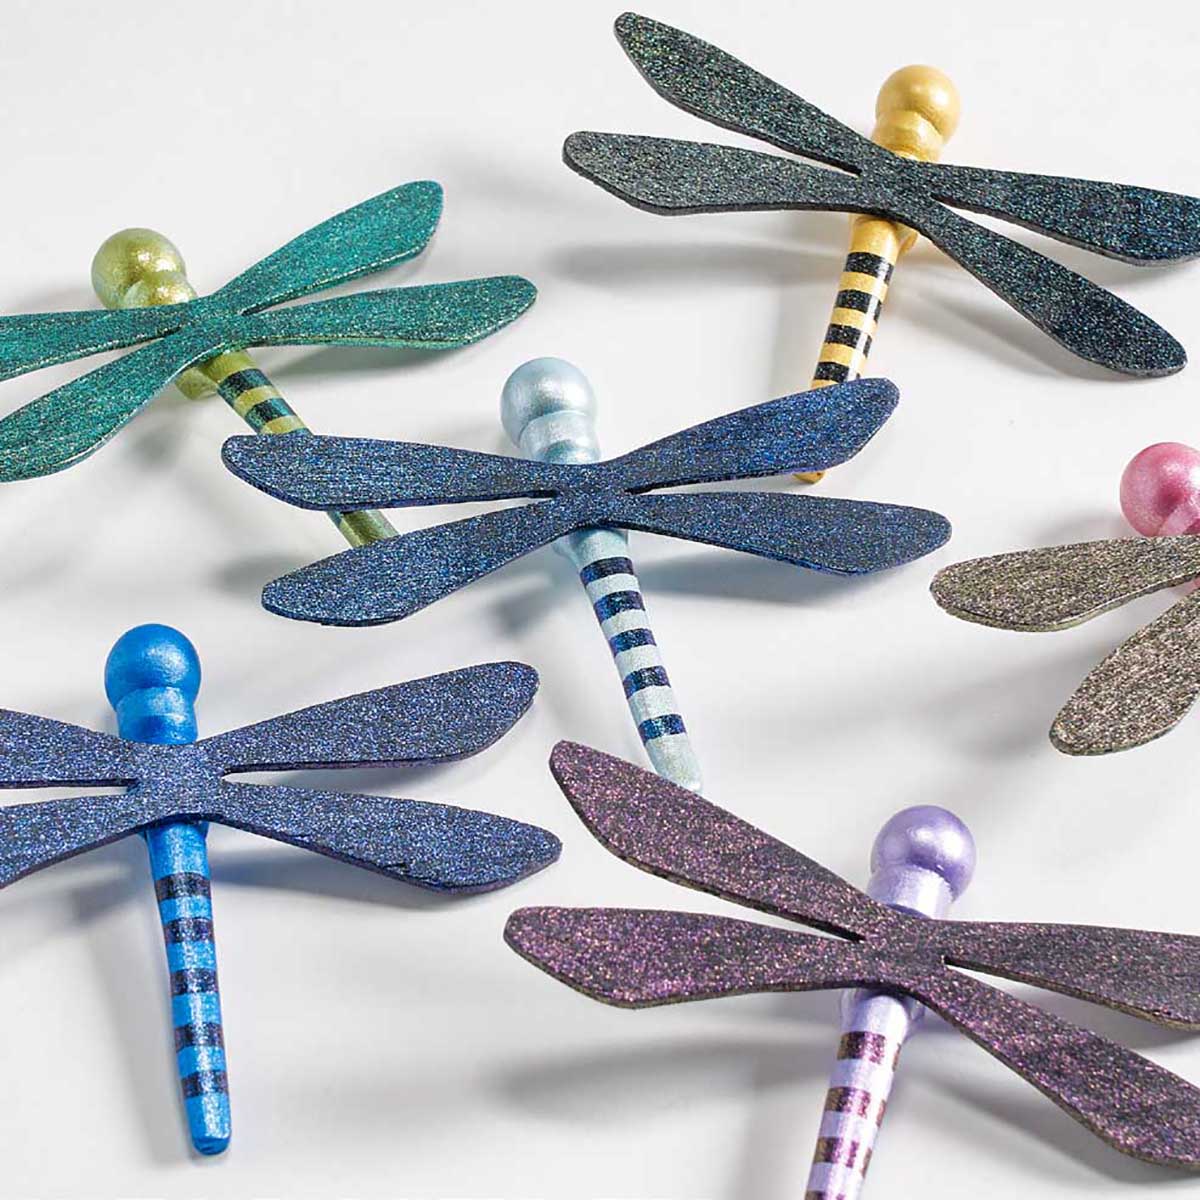 Folkart - Dragonfly Glaze 2oz - Violet -blauw -groene verschuiving